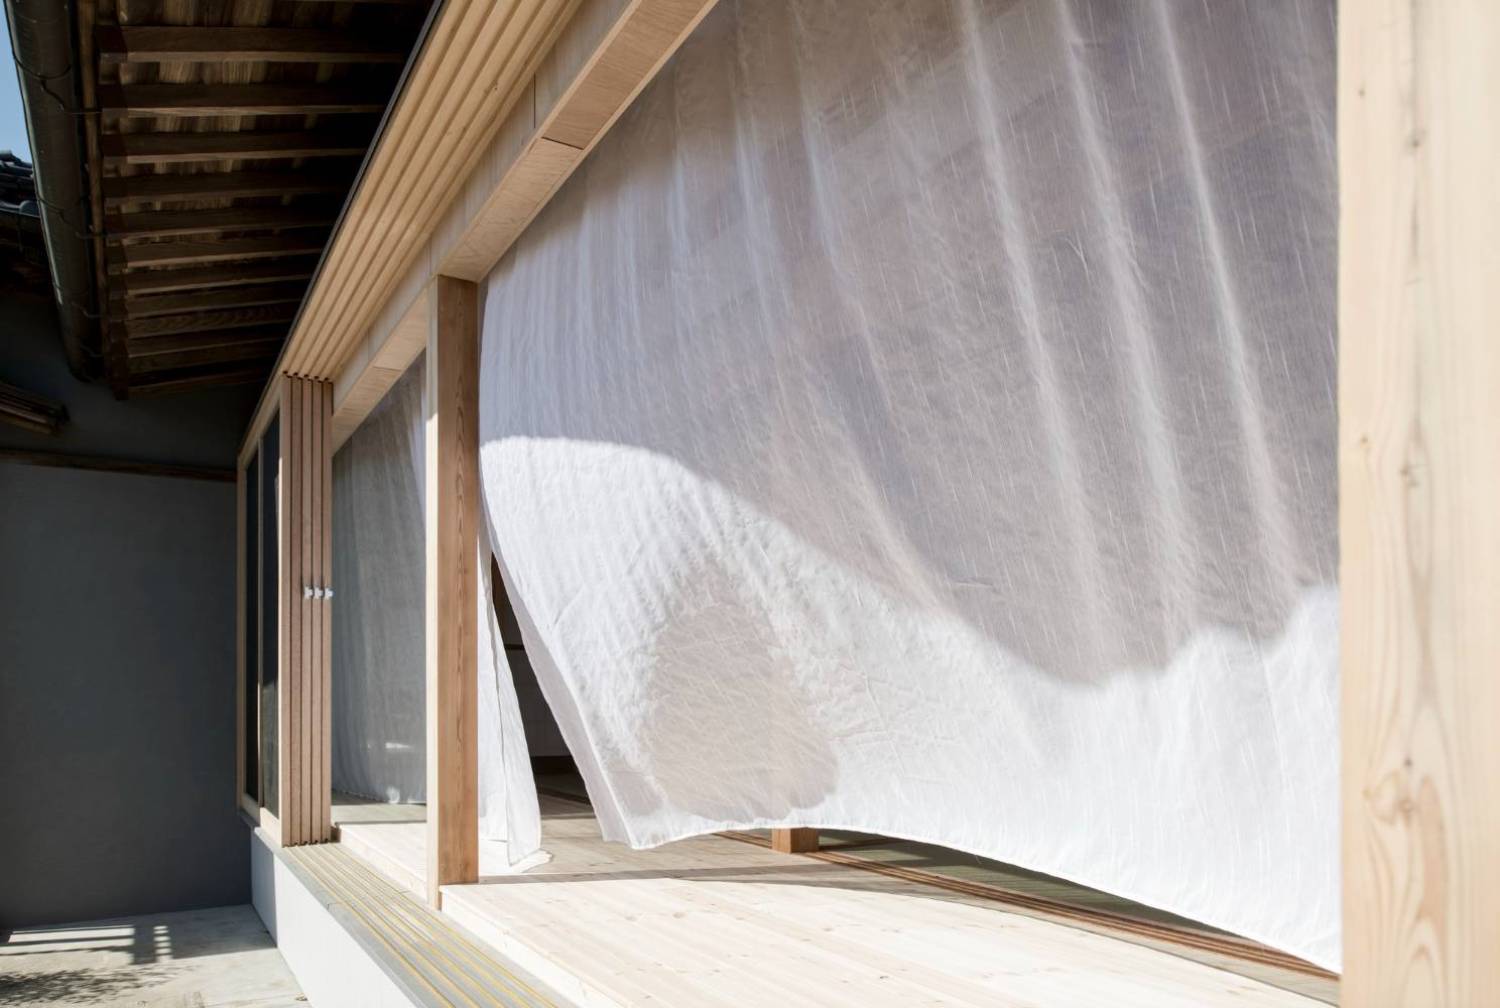 Project: House in Sakura. Architect: Naoyuki Tokuda / tokudaction. Location: Sakura, Chiba, Japan. Photographer: Masaki Komatsu